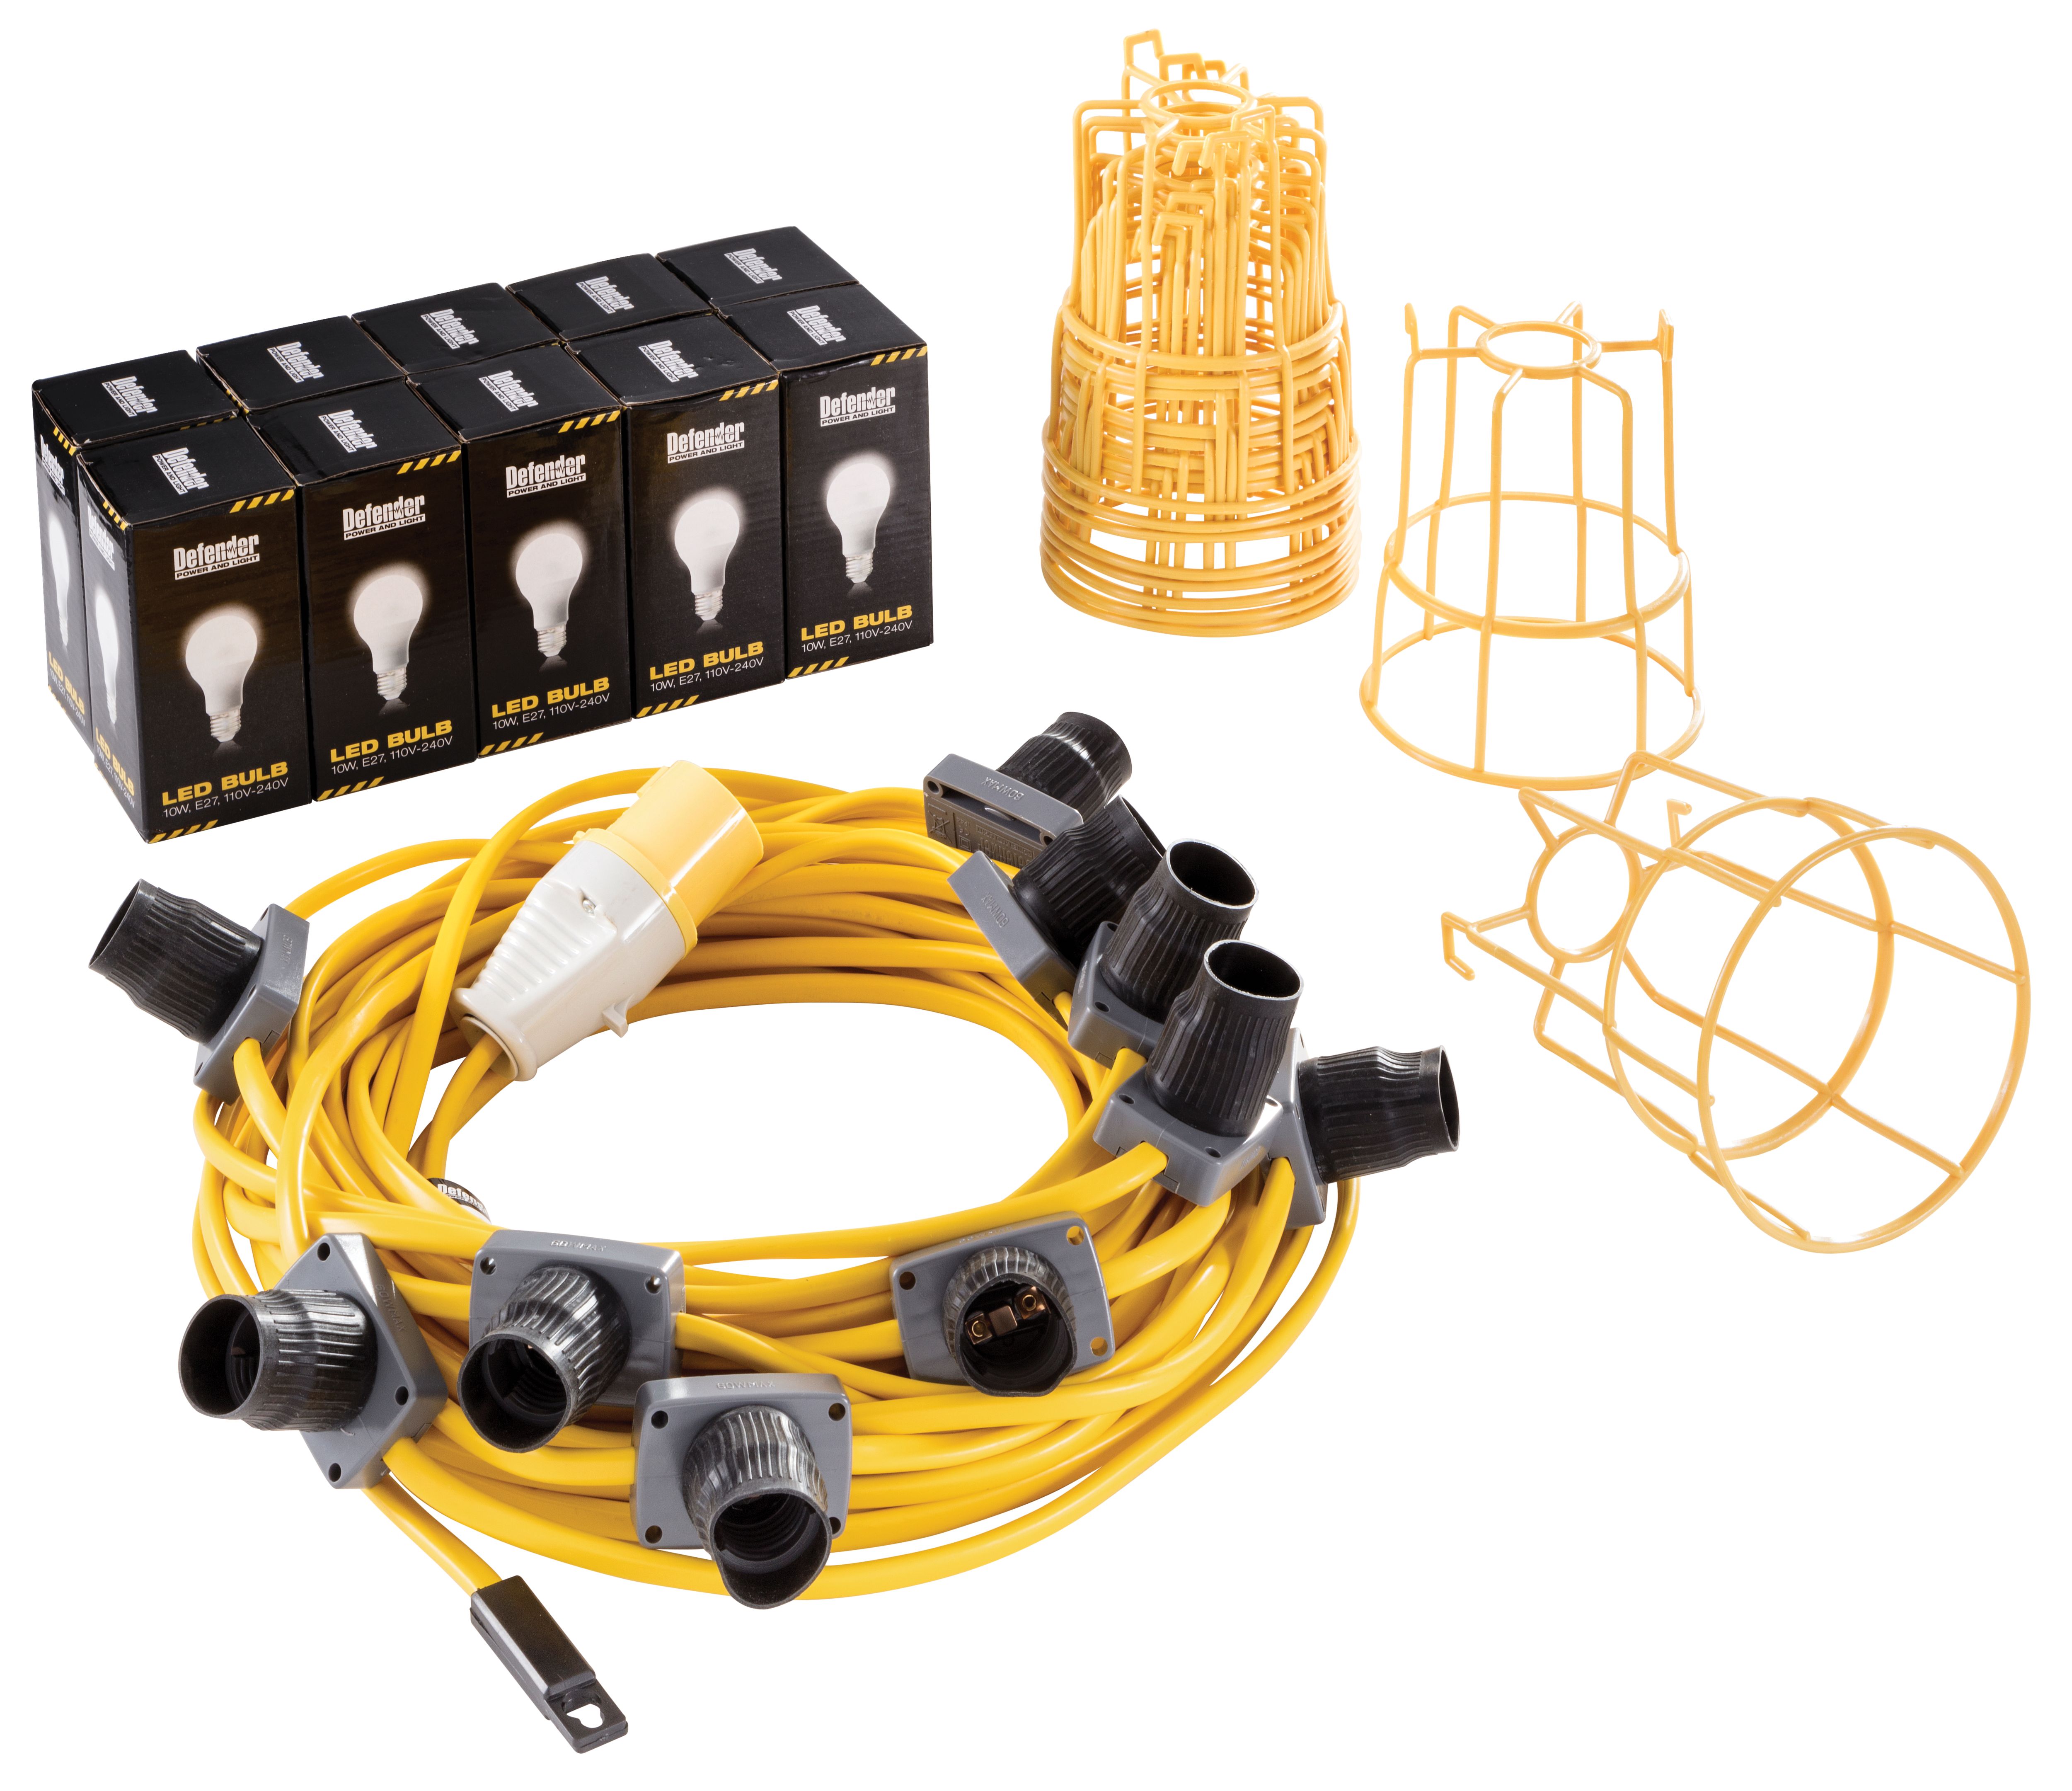 Image of Defender LED Festoon 22m (Gls Style) Light Kit